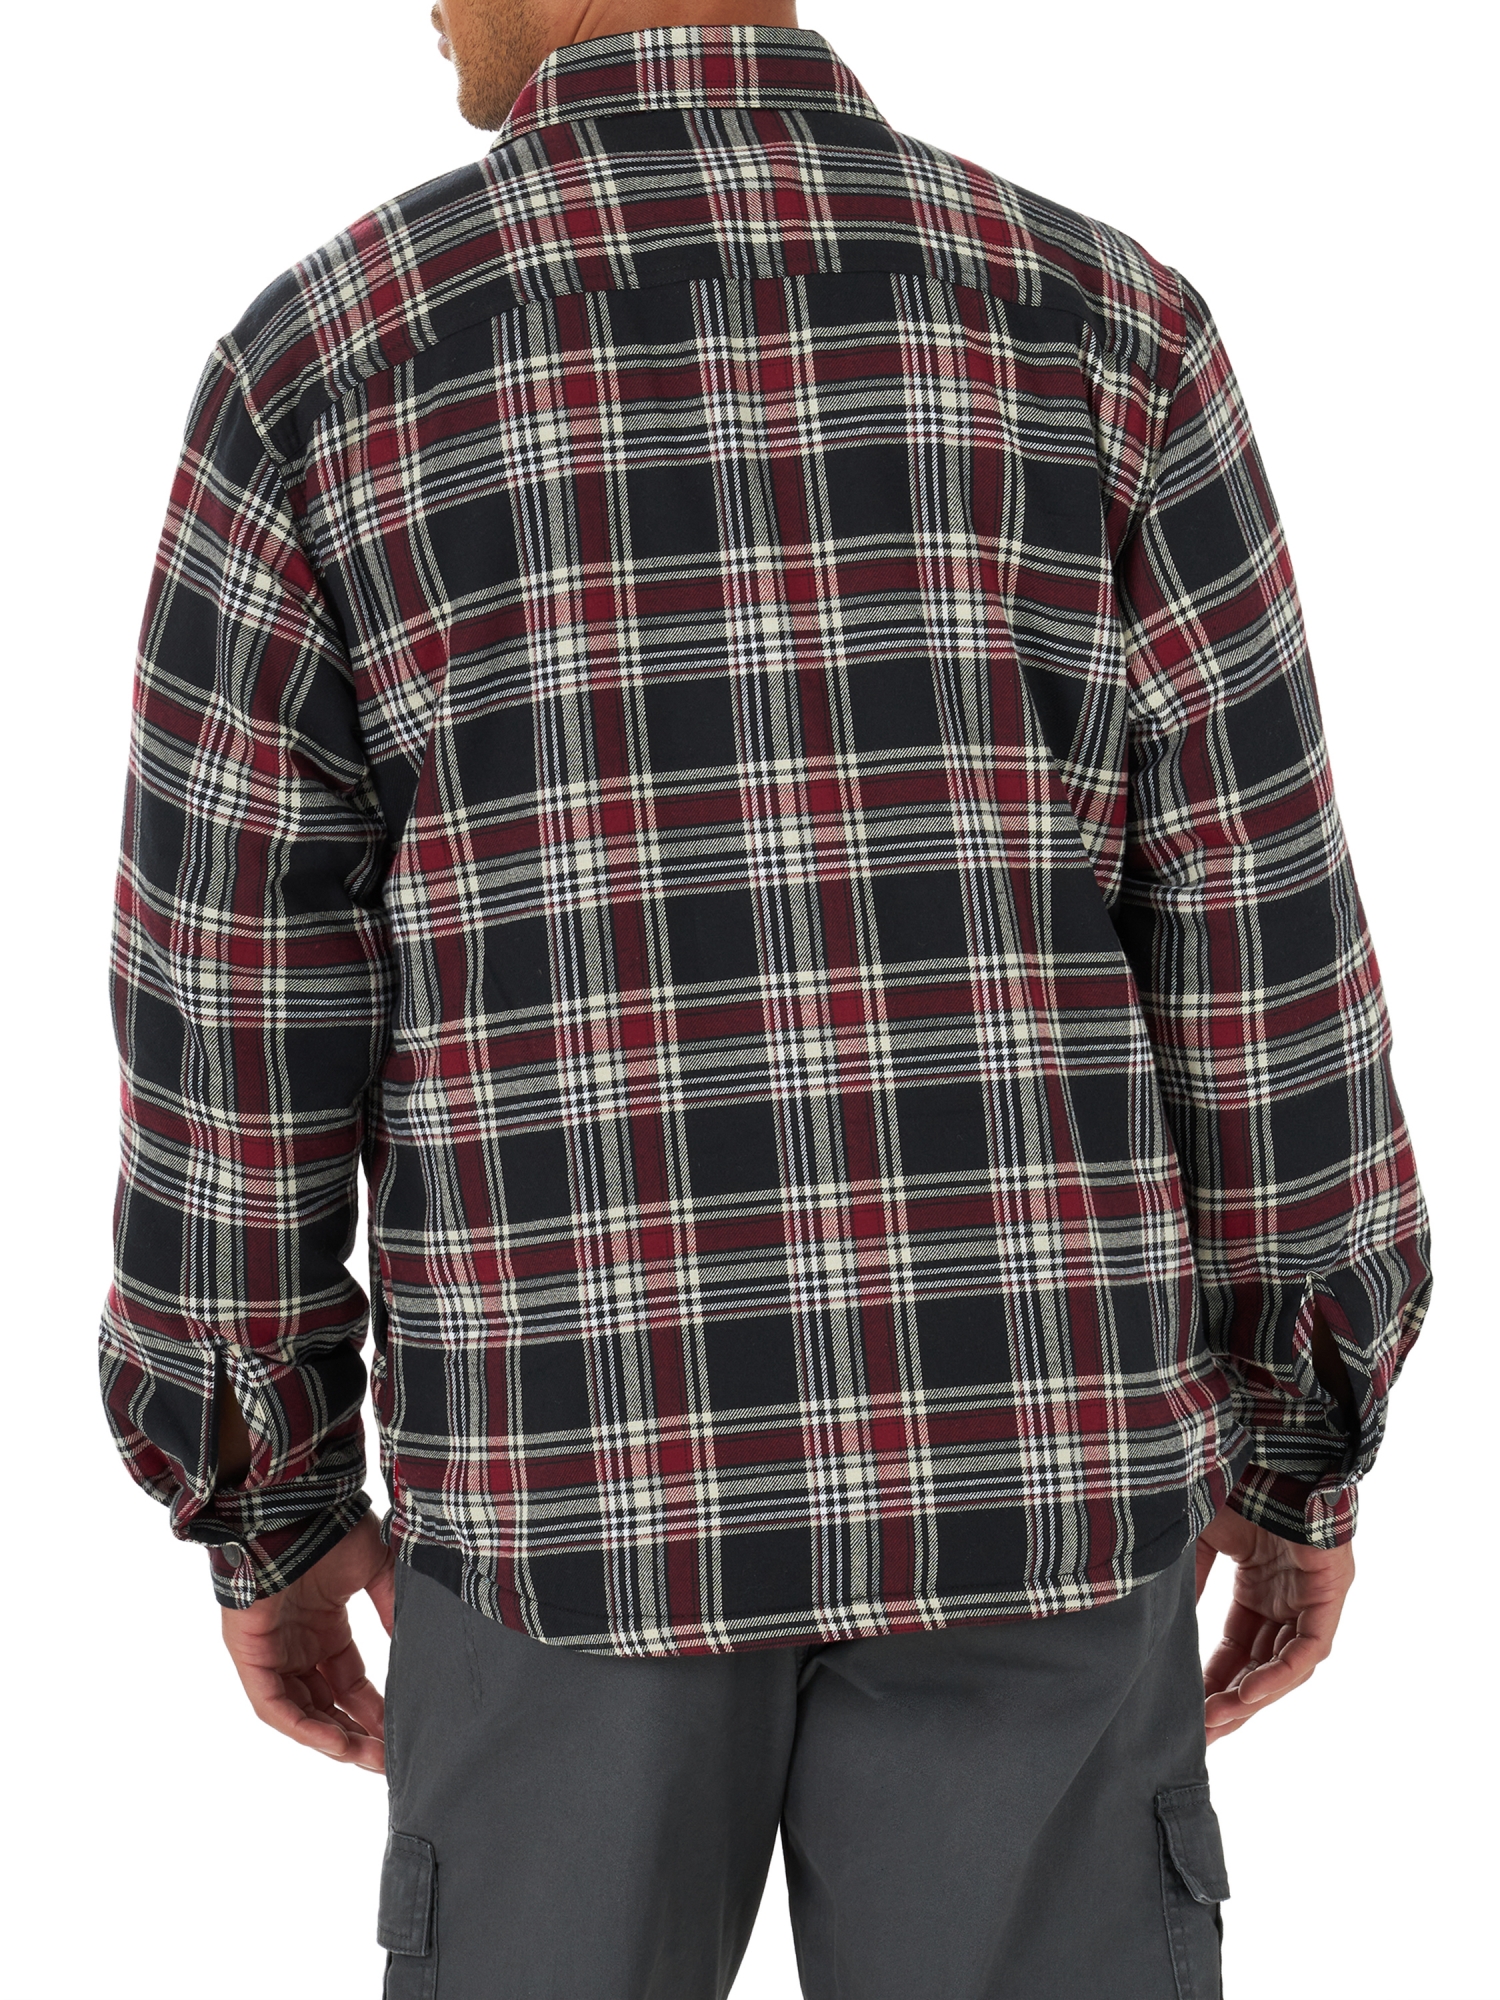 Wrangler Men's Heavyweight Sherpa-Lined Shirt Jacket - image 2 of 5